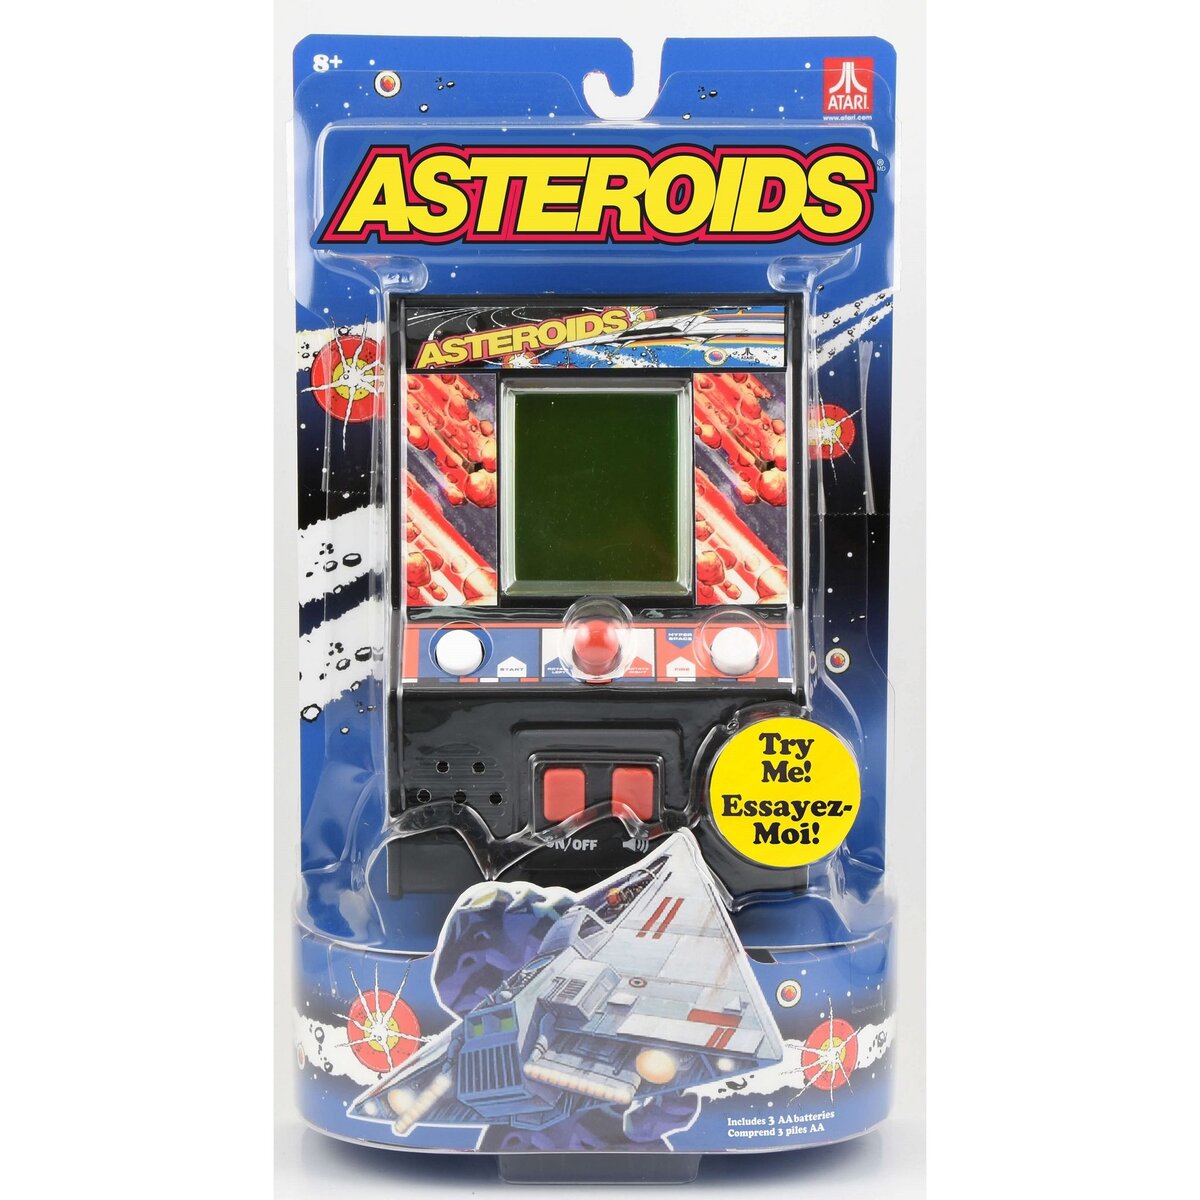 EVOLUTION Astéroids mini arcade game